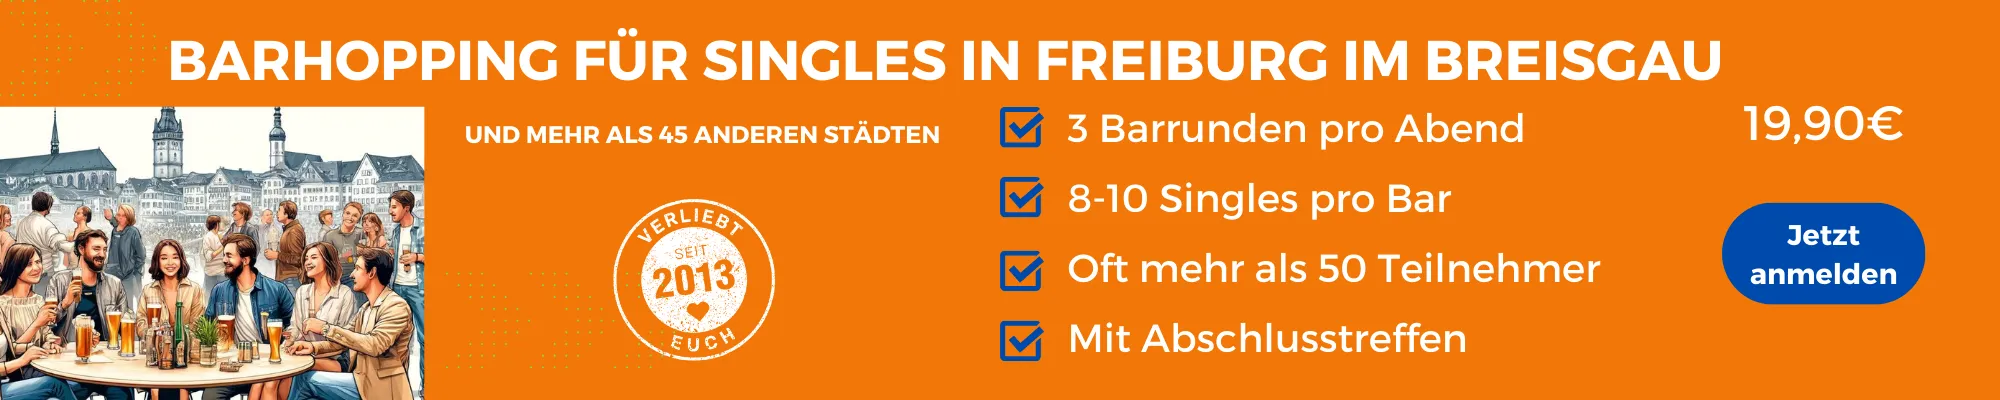 Face to Face Freiburg: Barhopping für Singles in Freiburg